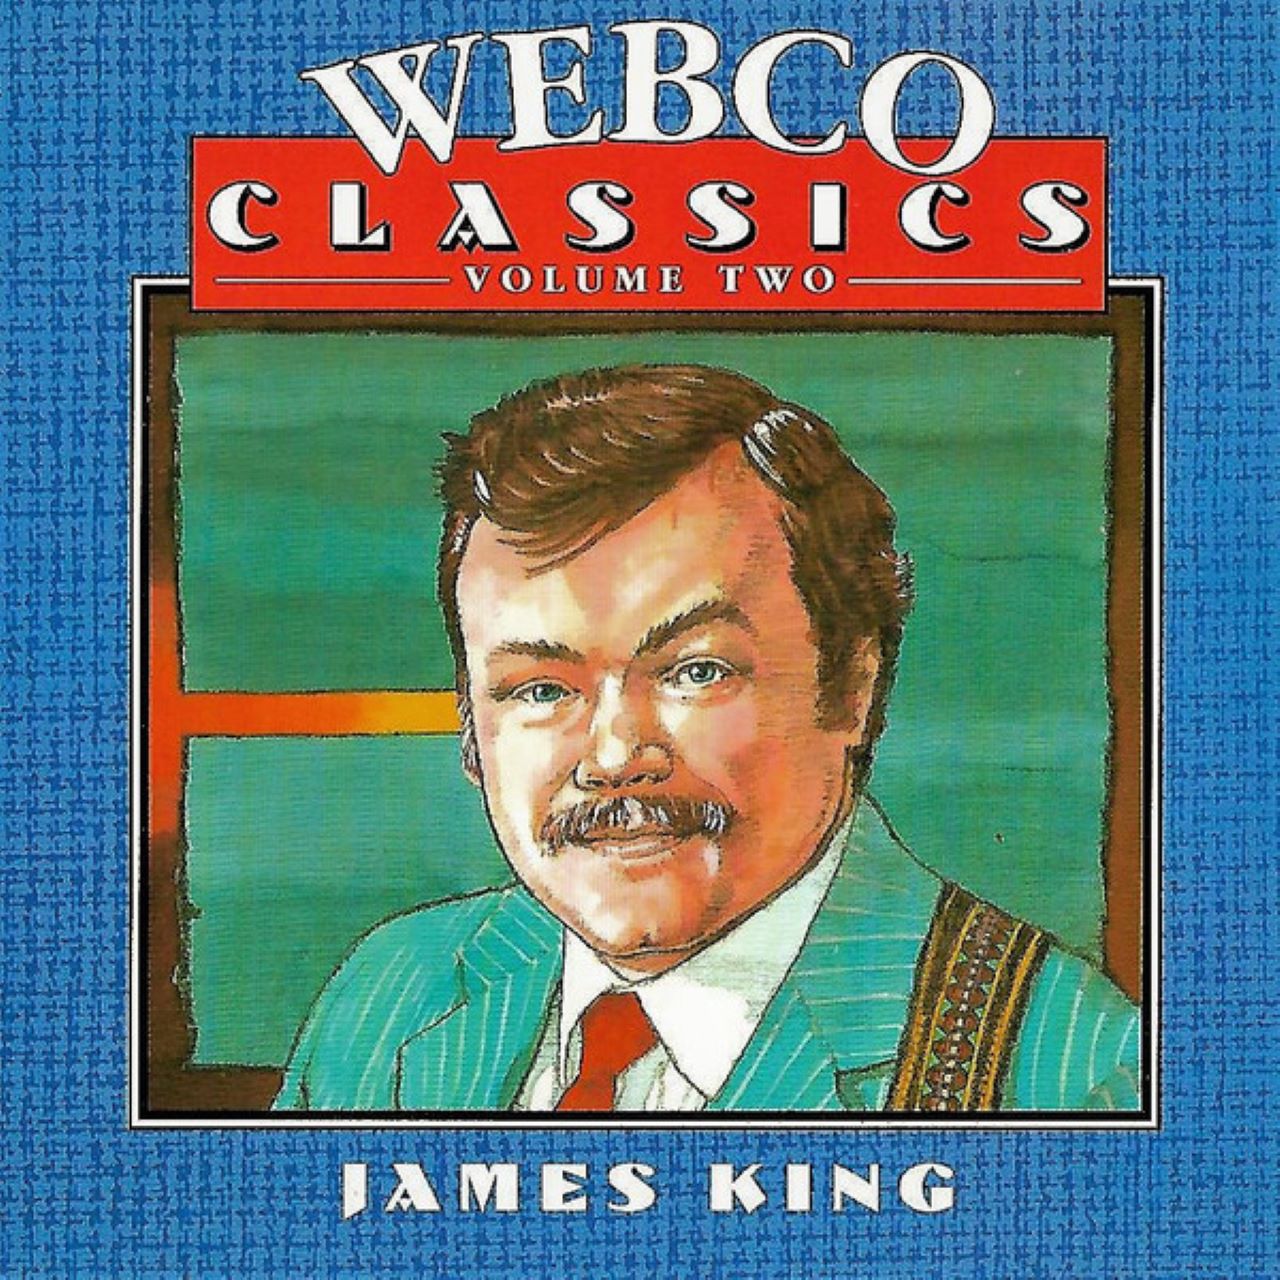 James King - It's A Cold, Cold World - Webco Classics Vol. 2 cover album